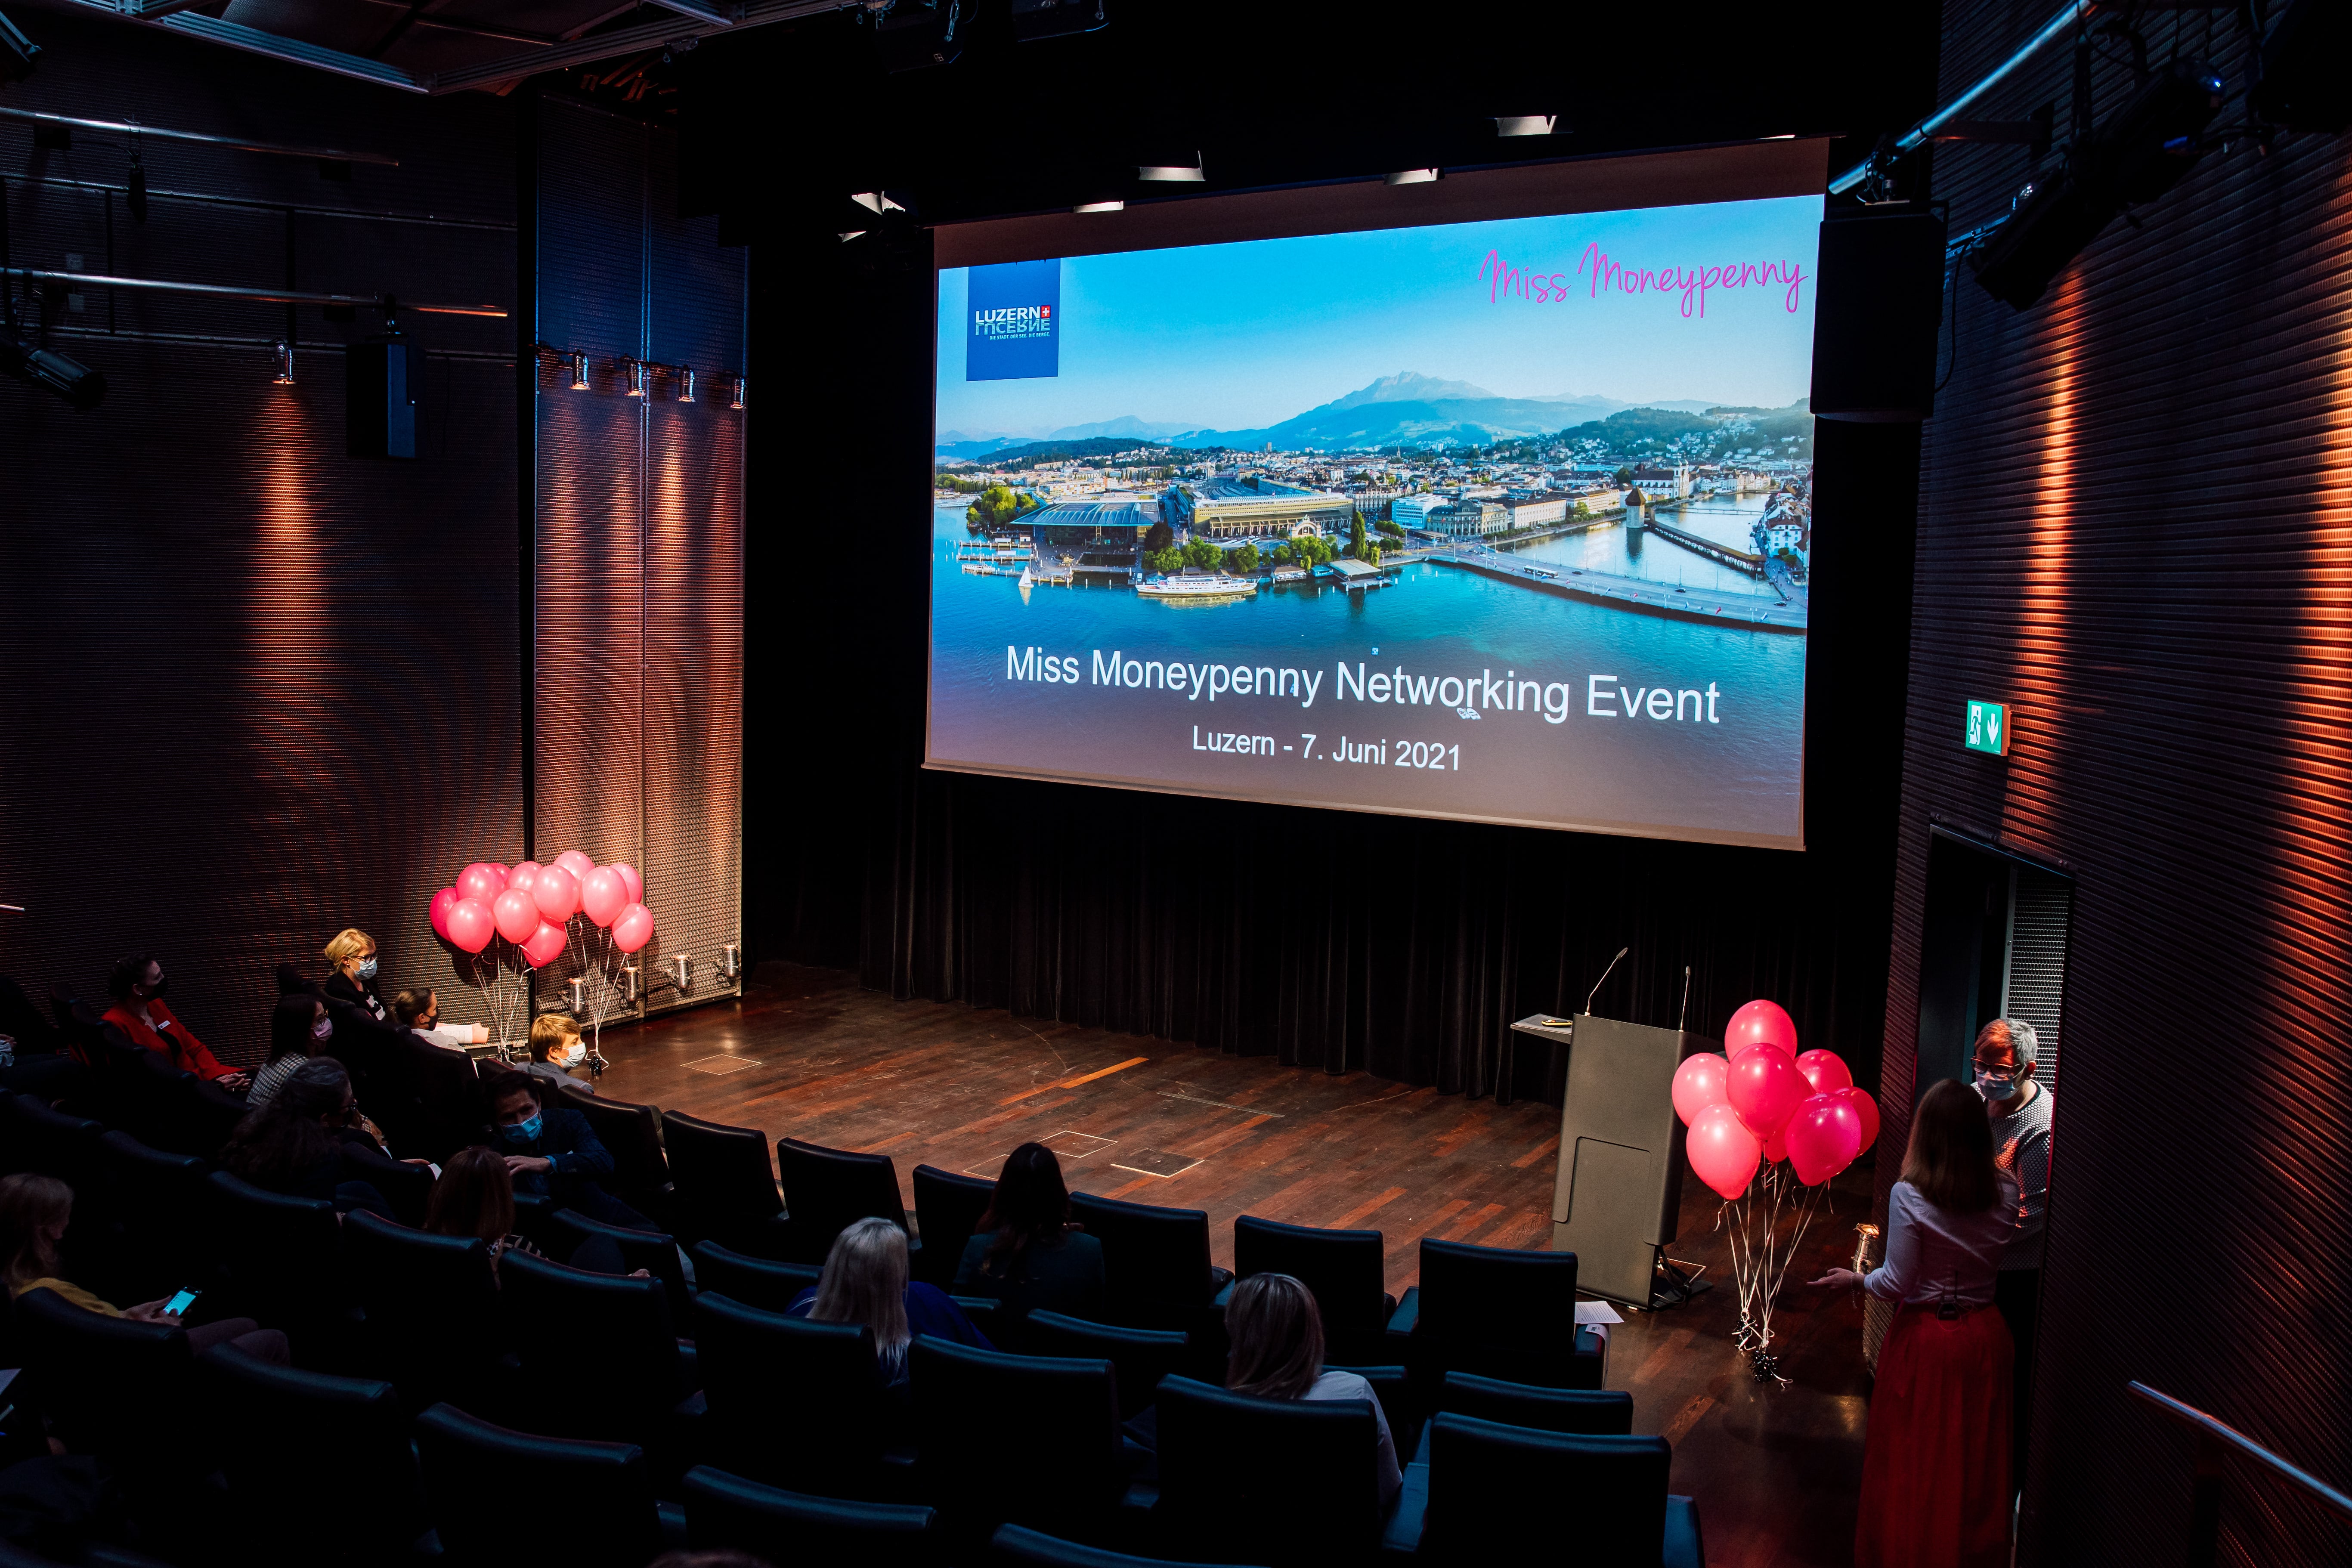 Miss Moneypenny Networking Event 2021 im KKL Luzern